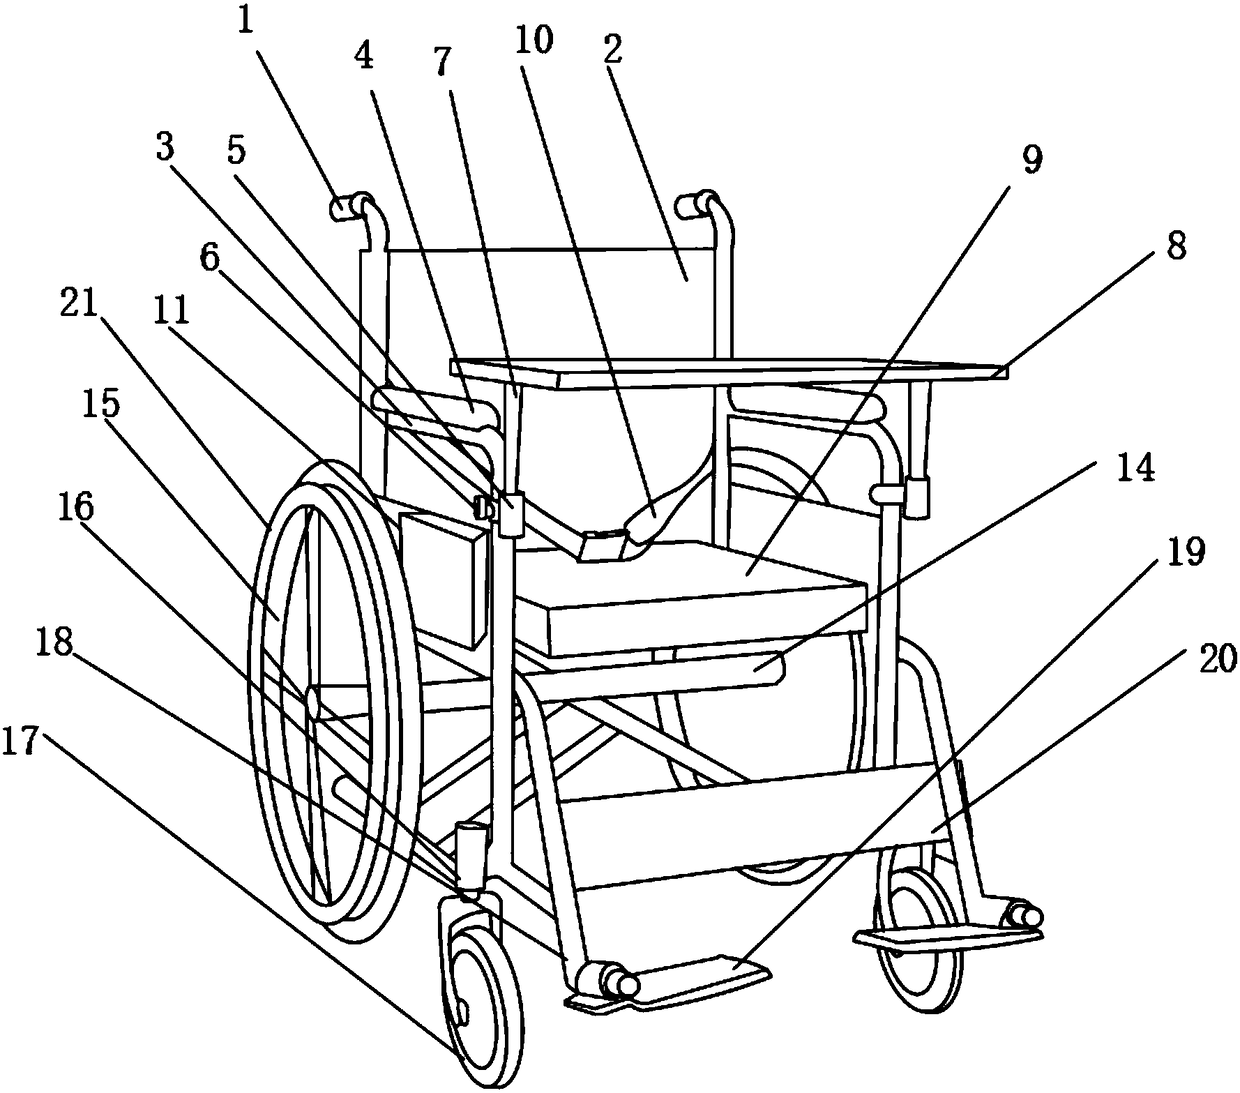 Wheelchair for medical rehabilitation